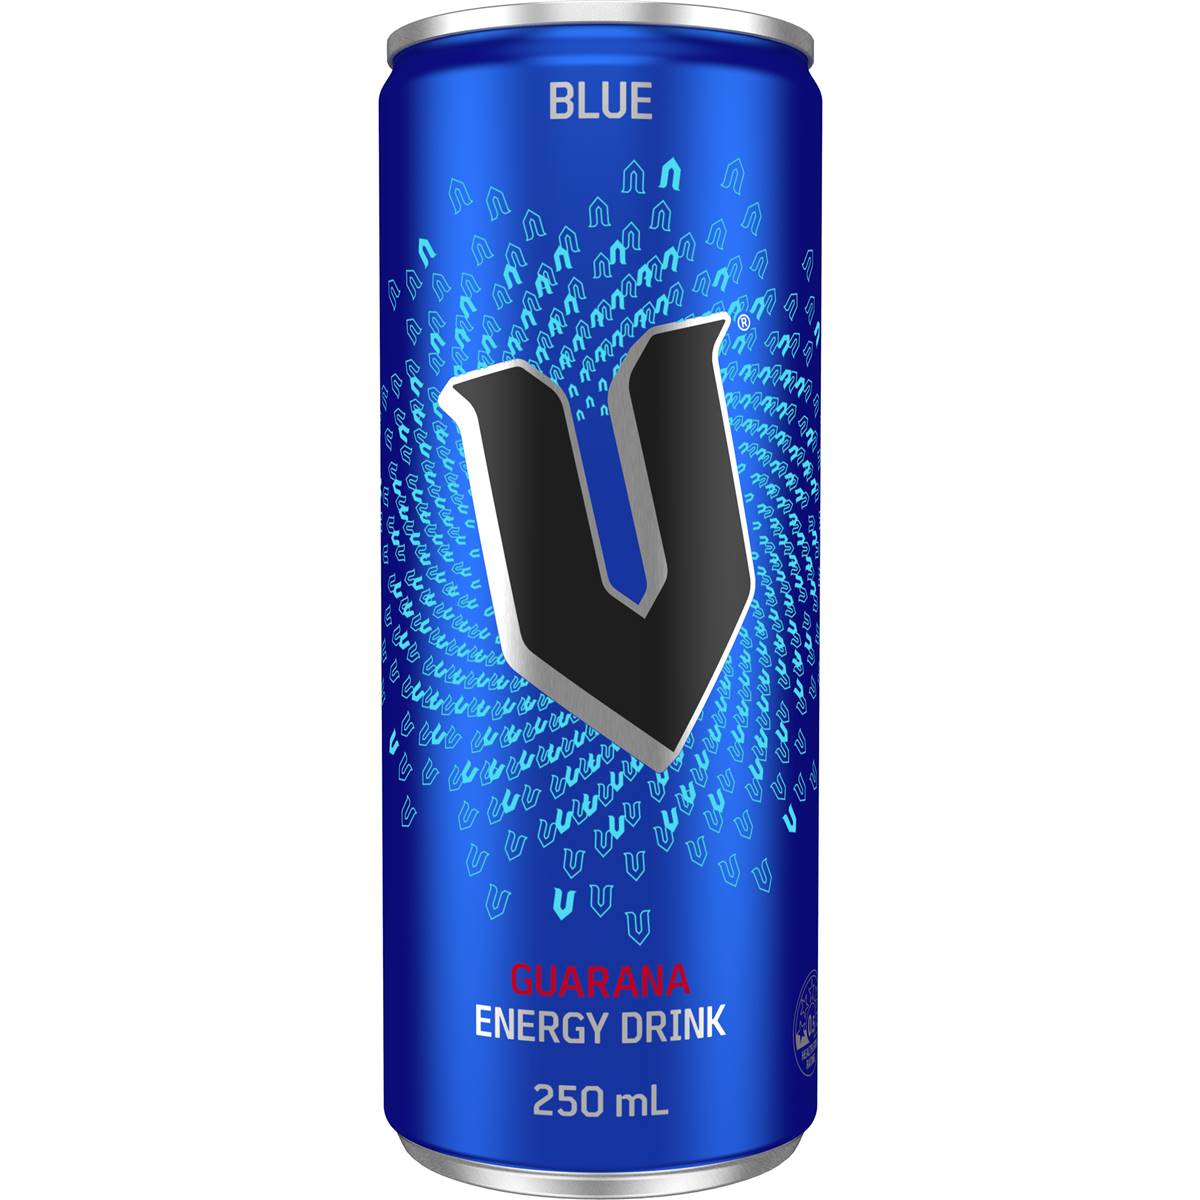 Energy 5 adventure. Blue Energy Drink. Энерджи Дринк. NS энергетический напиток. Guarana Energy Drink.